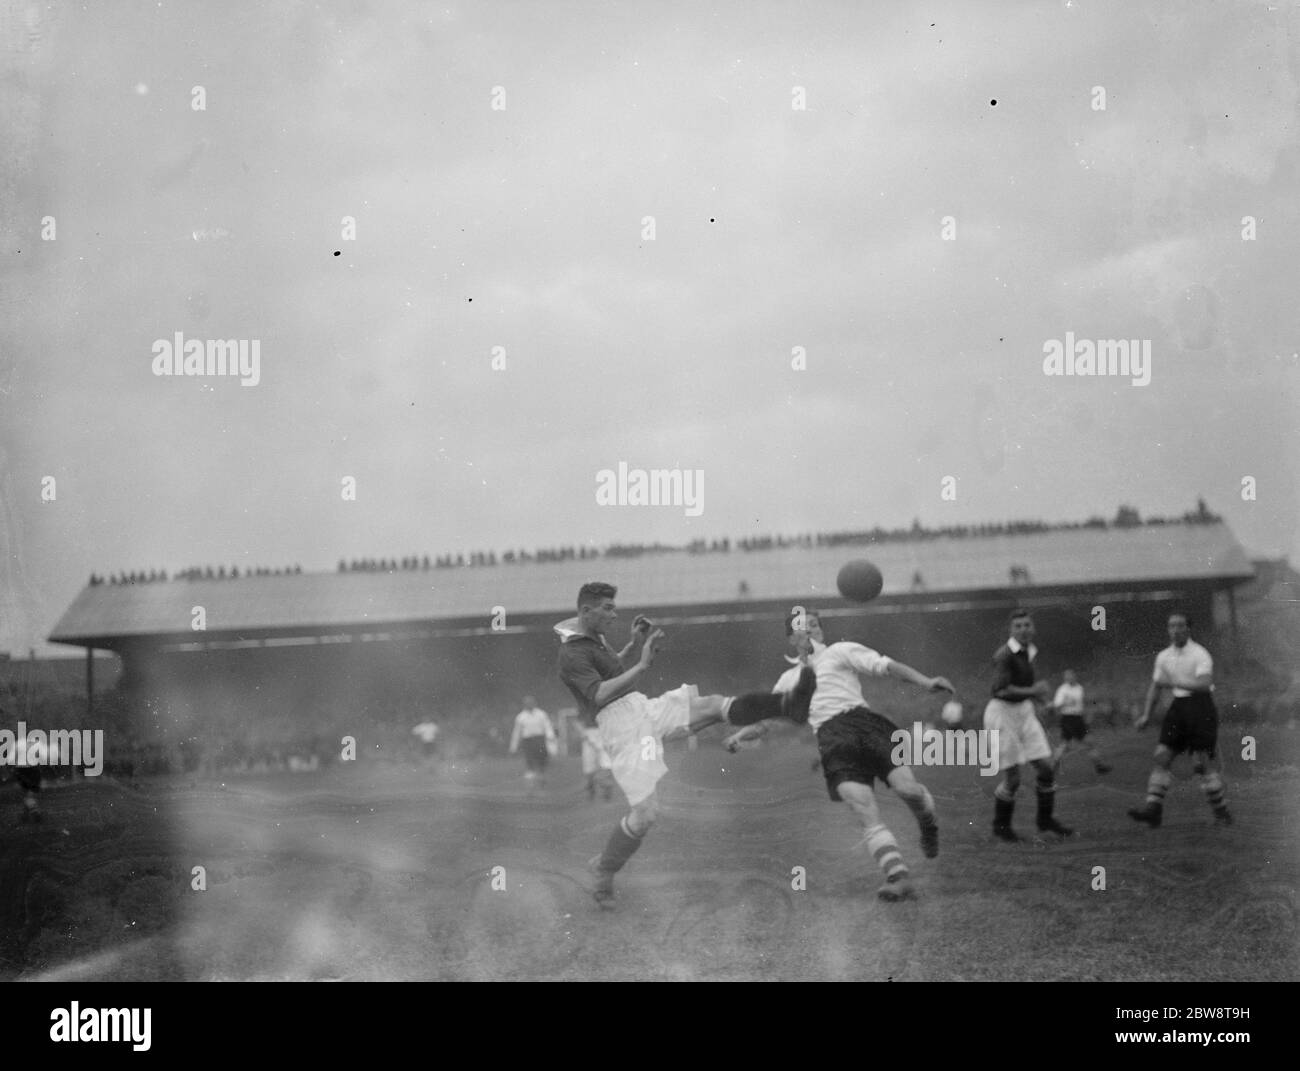 Football match : Arsenal Football Club versus Charlton Athletic Football Club at Highbury Stadium , London . Two players compete for the ball . 1936 Stock Photo